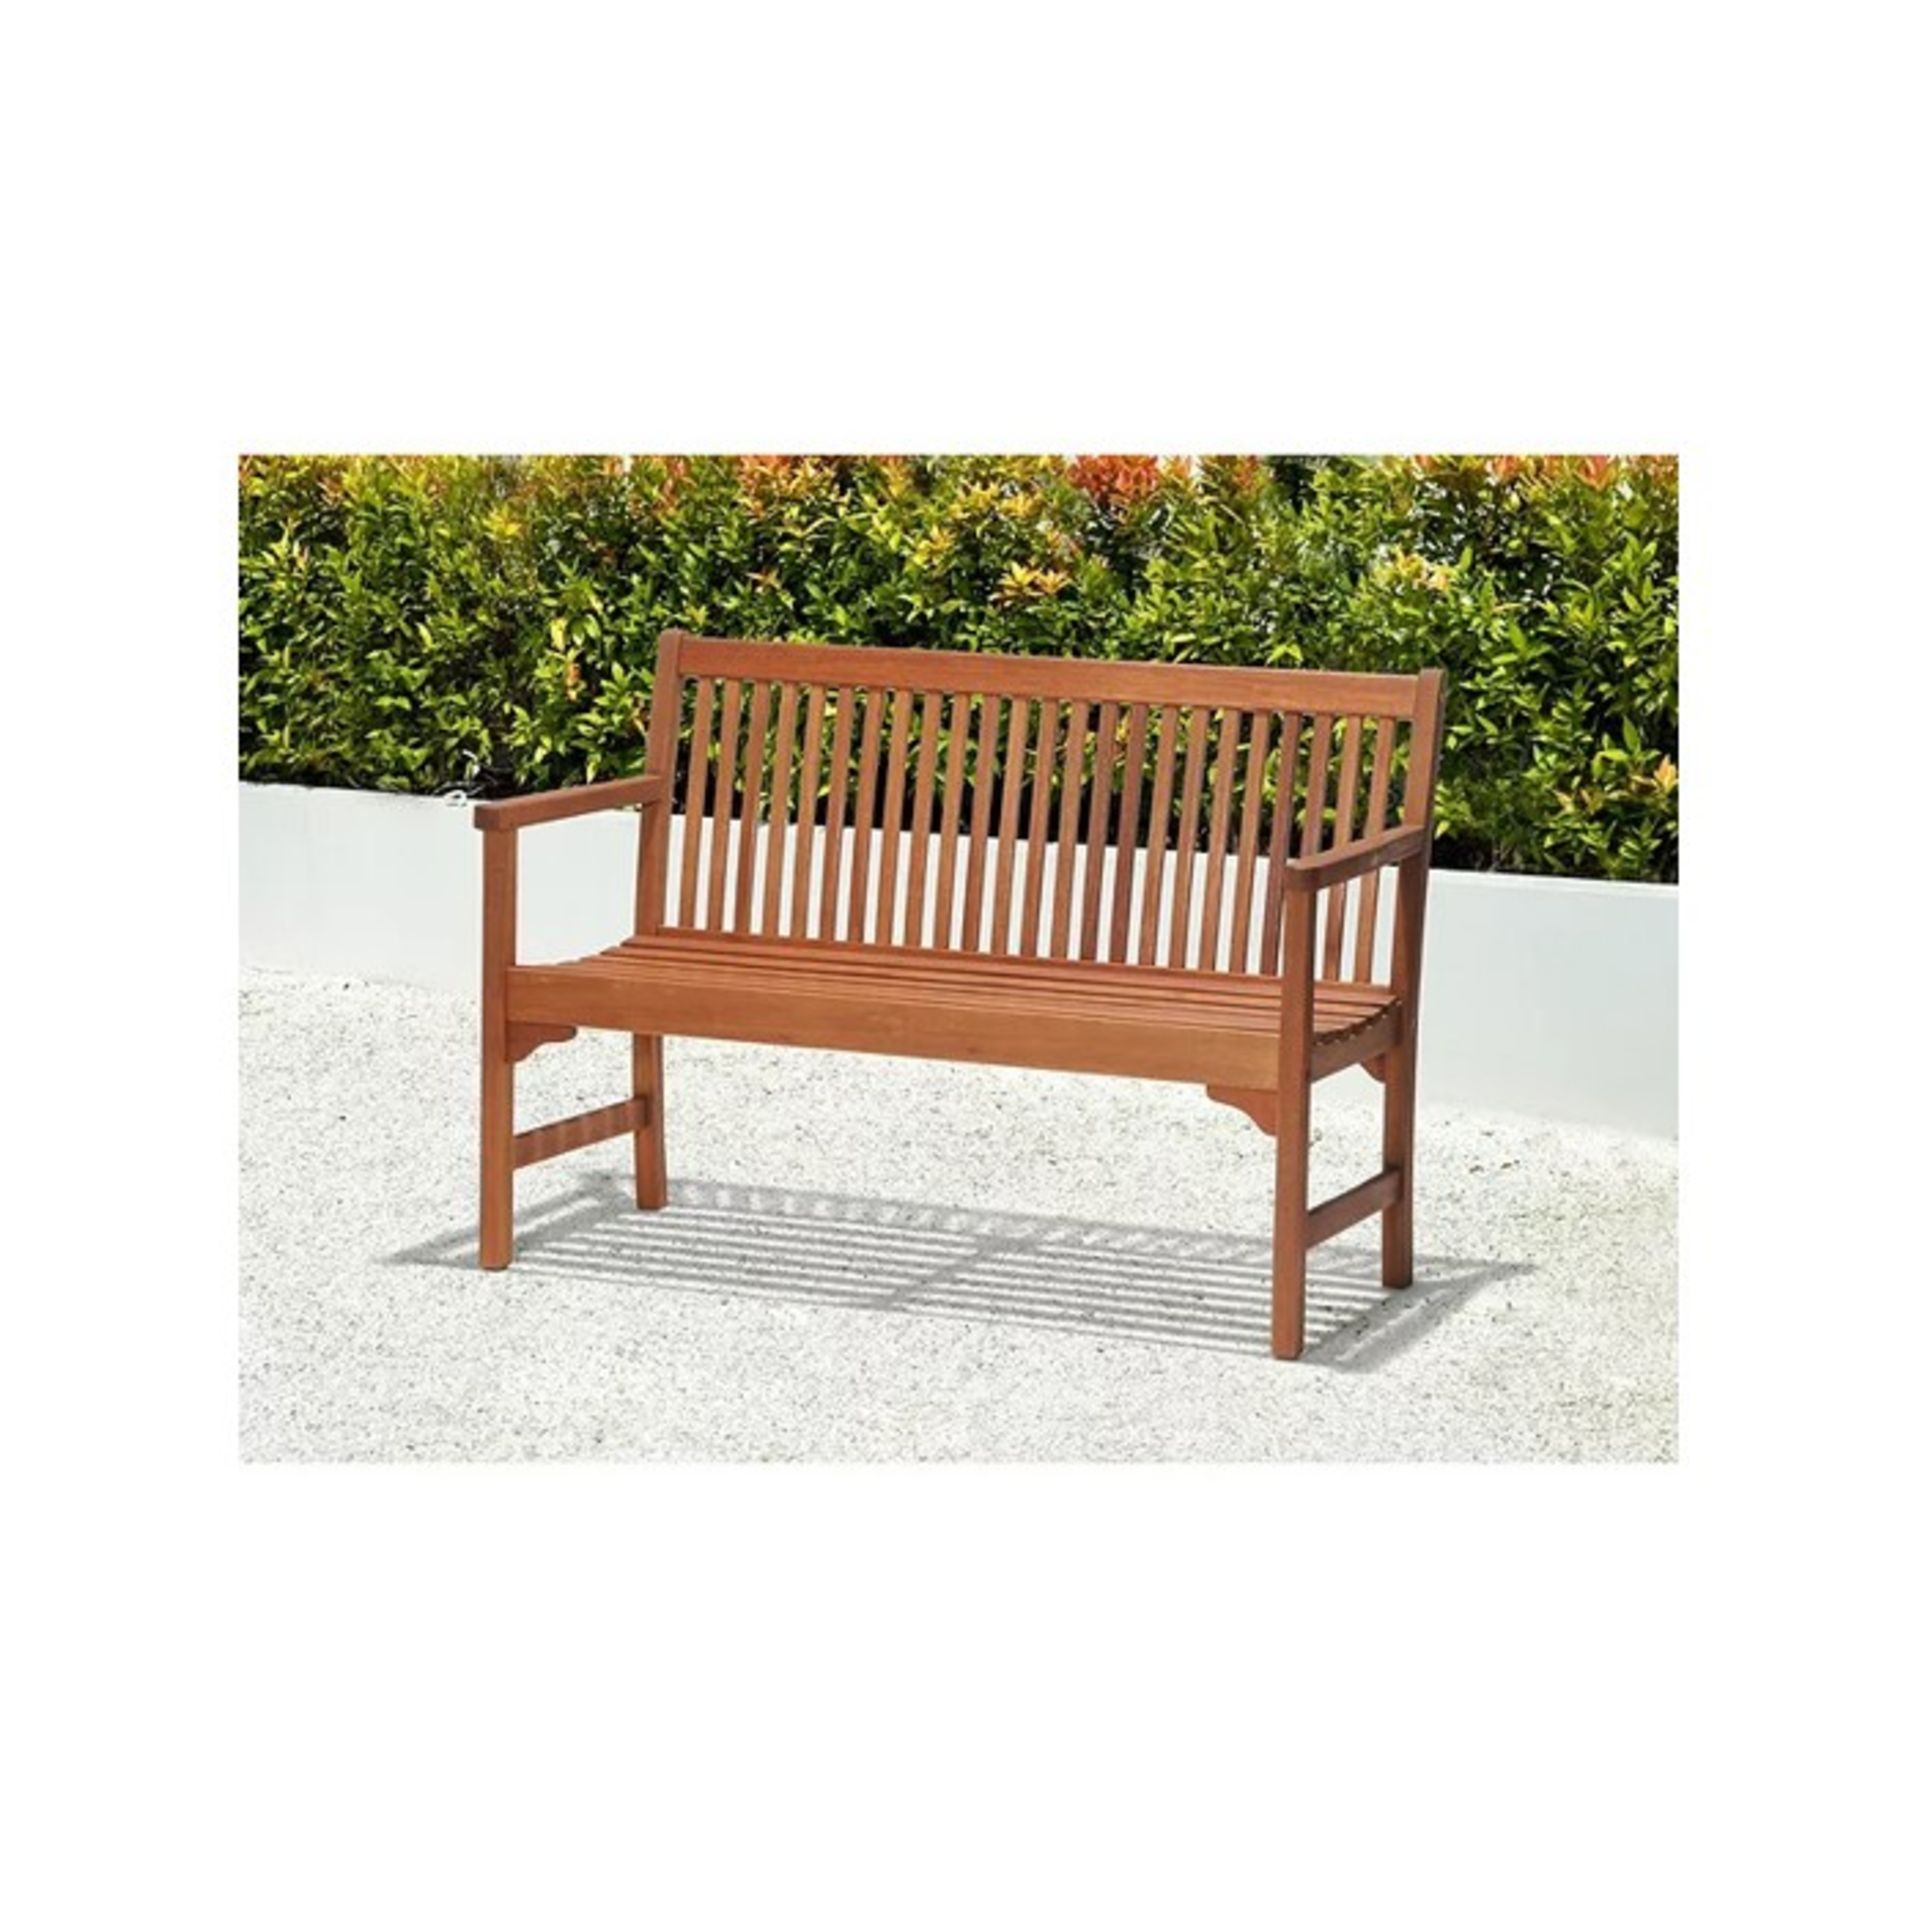 5 X BRAND NEW JOHN LEWIS 2-Seater Garden Bench, FSC-Certified (Eucalyptus Wood), Natural. RRP £253. - Image 2 of 3